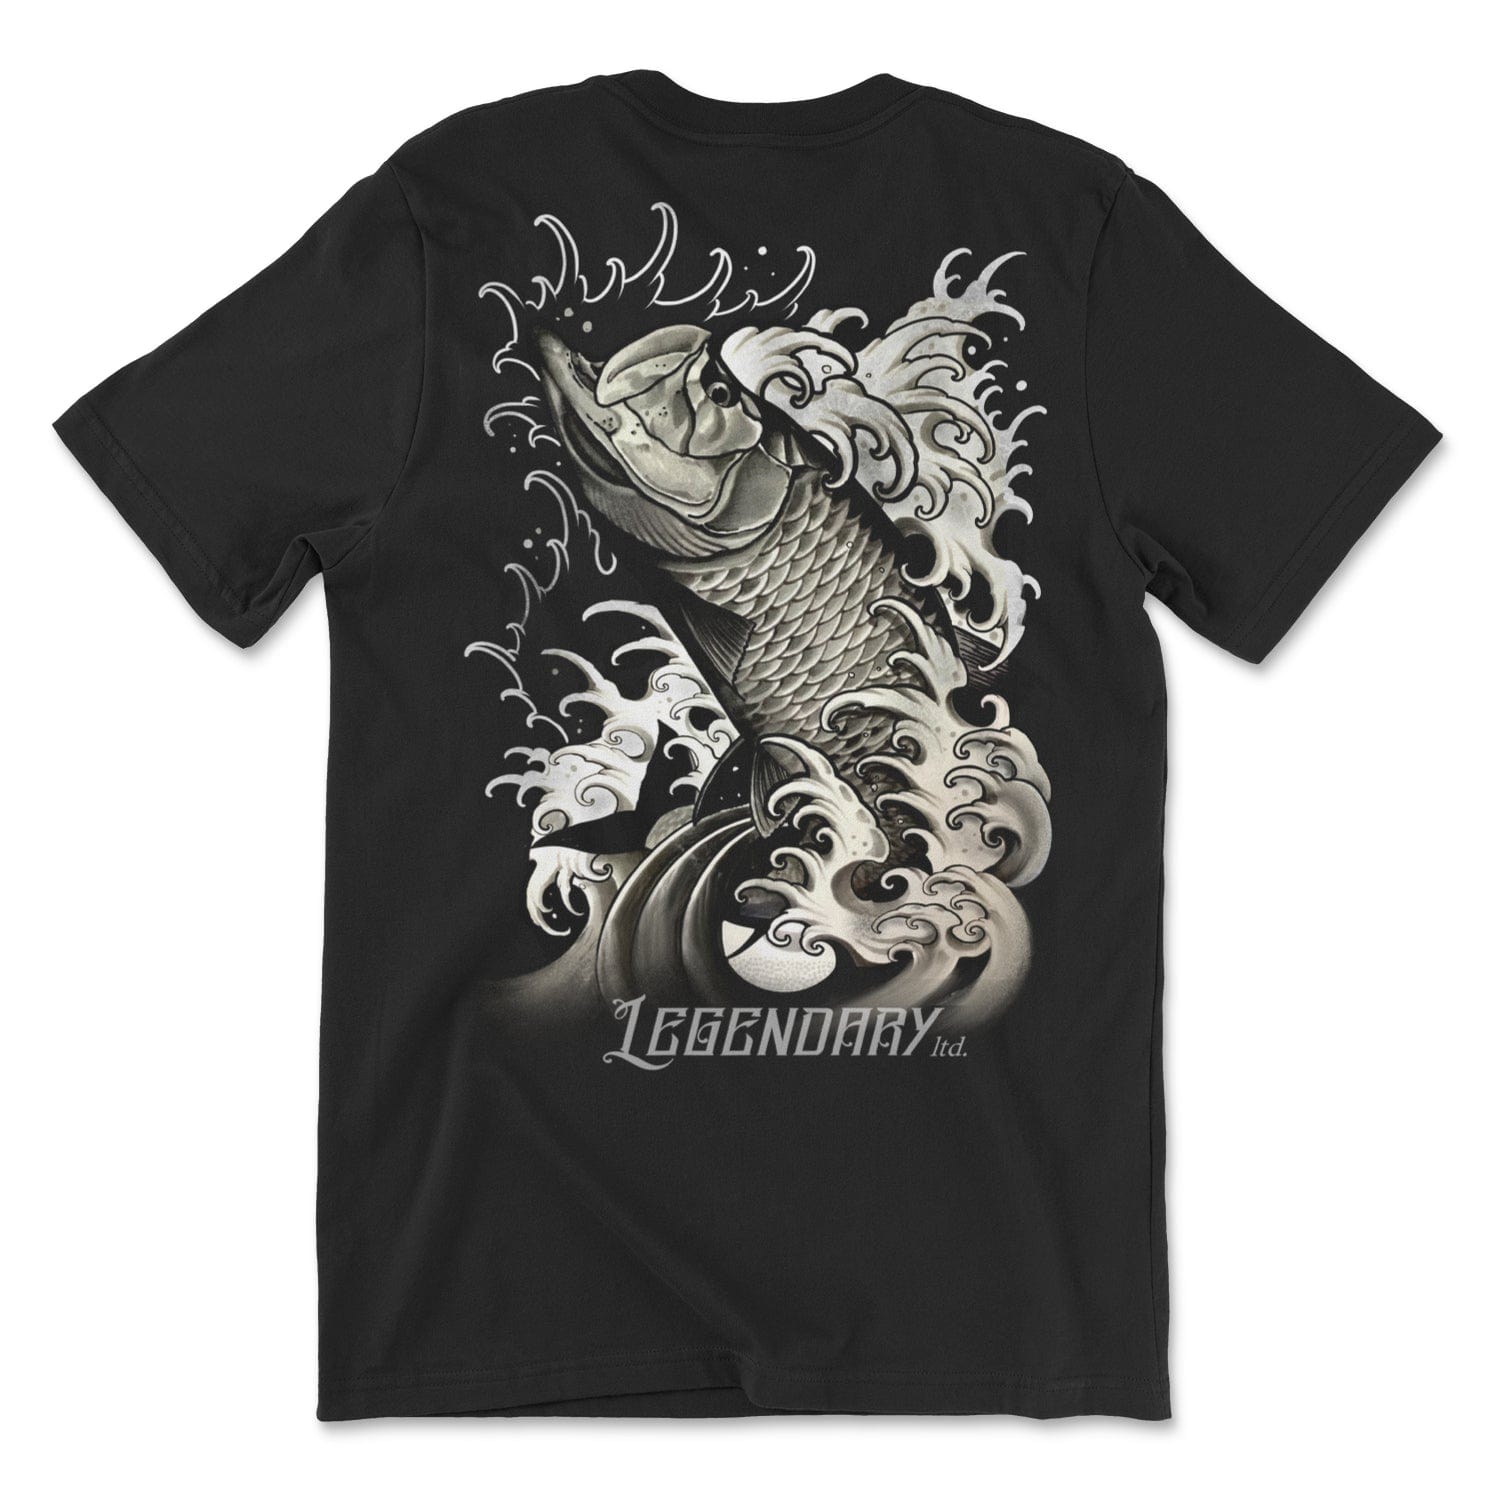 Fishing T Shirts - Men Graphics Tees - T Shirts with Graphics